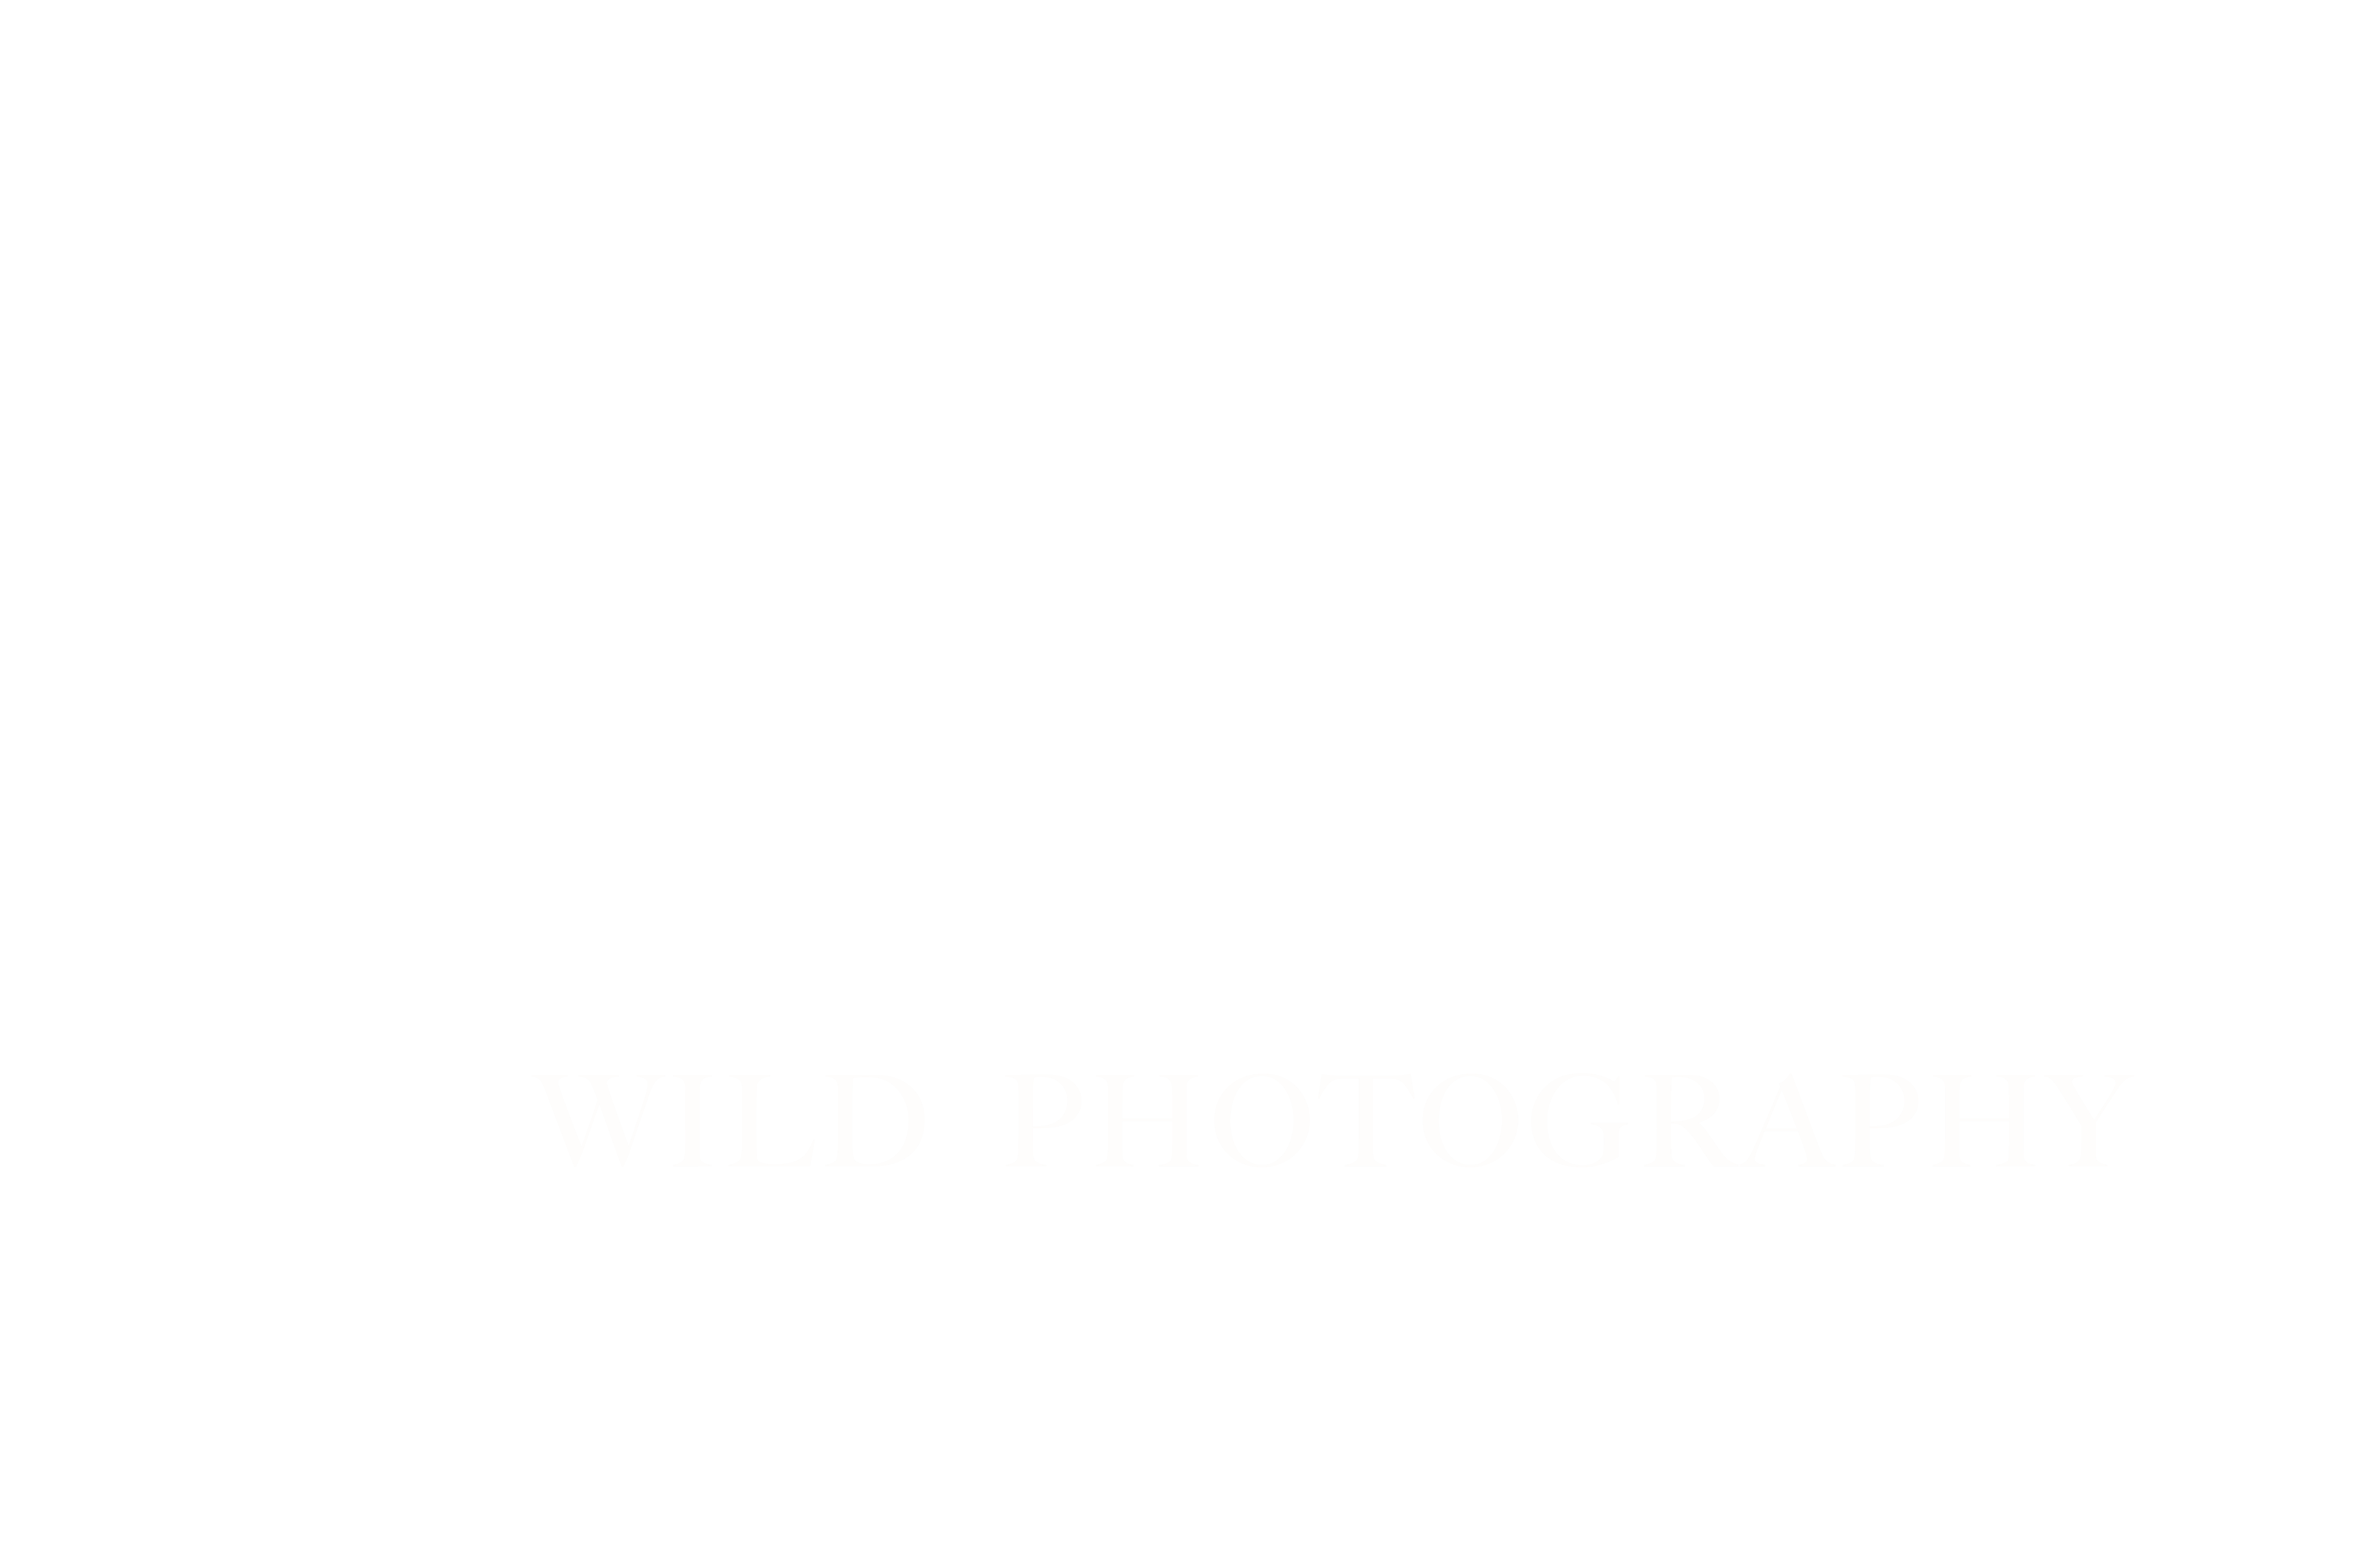 Leslie Poulson Wild Photography